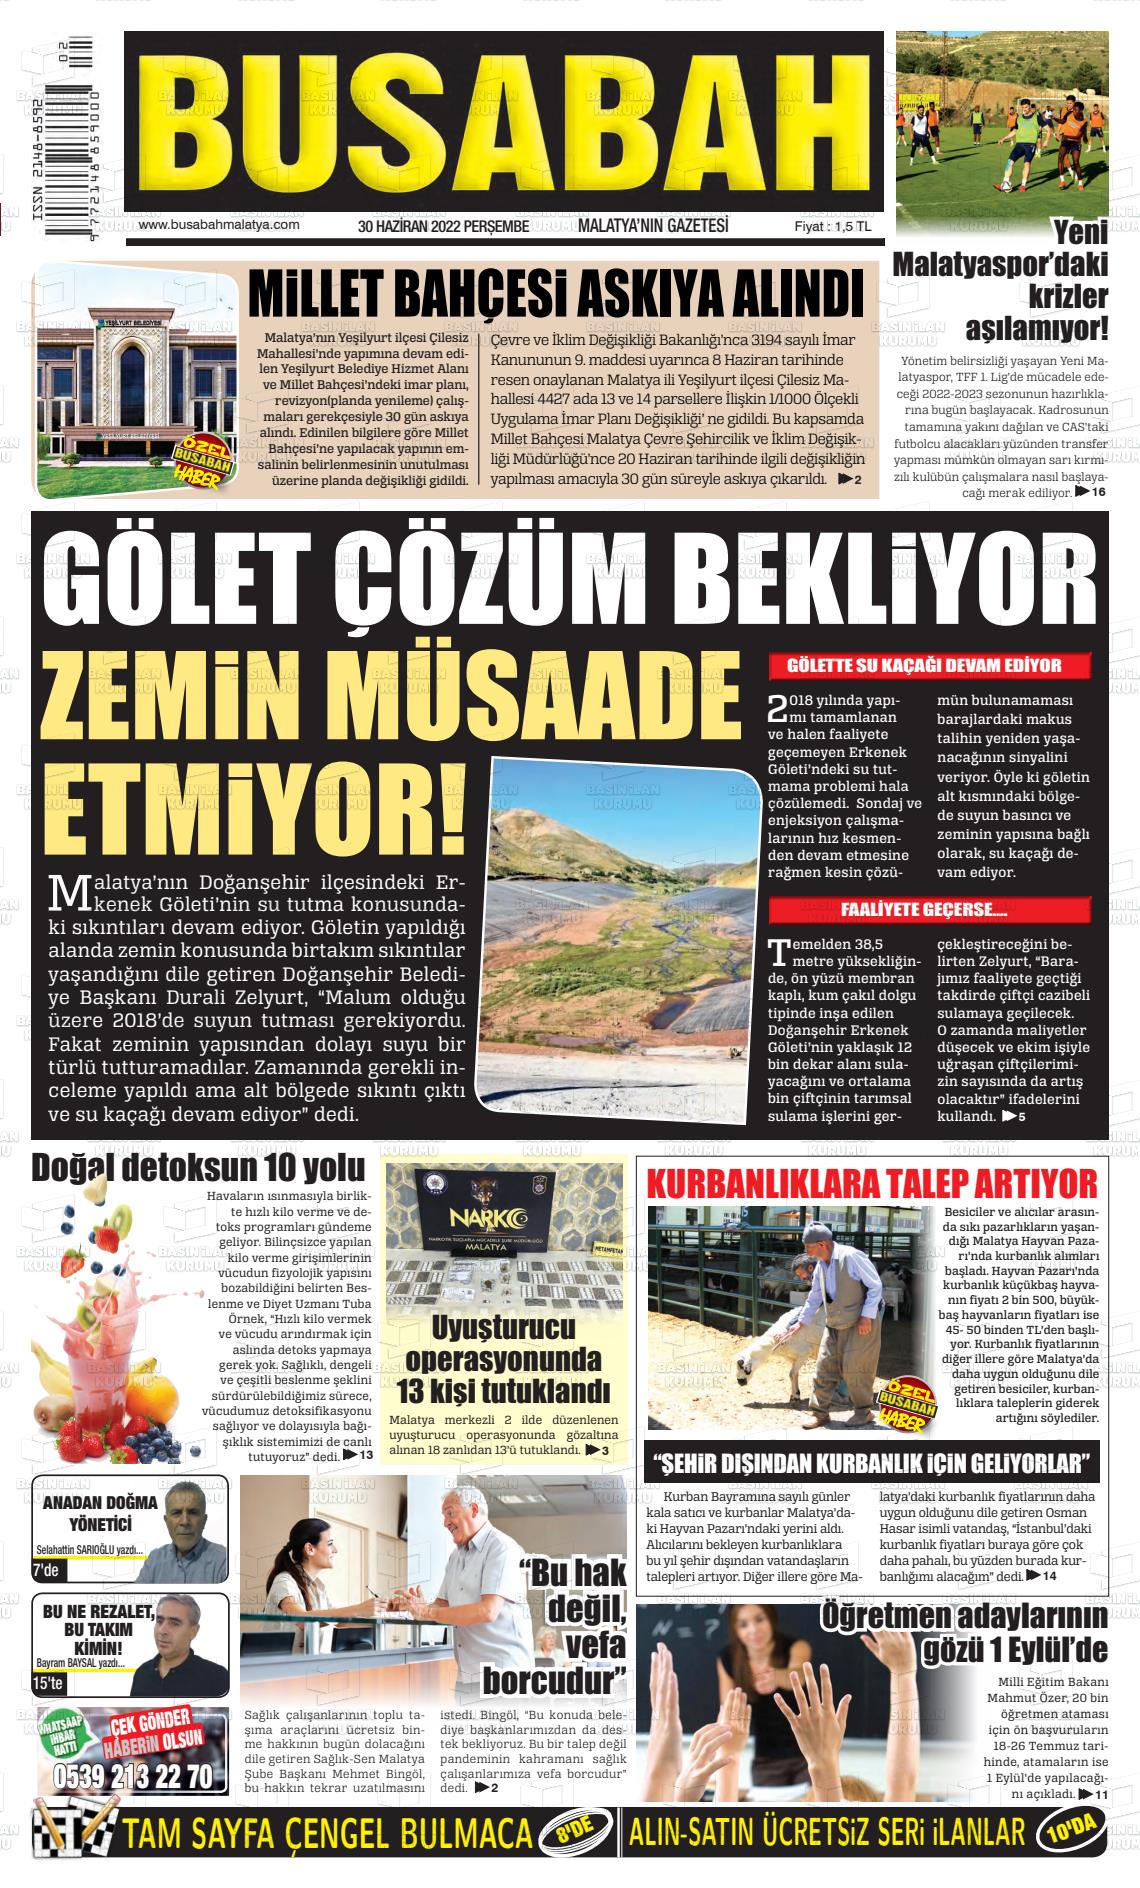 02 Temmuz 2022 BUSABAH Malatya Gazete Manşeti